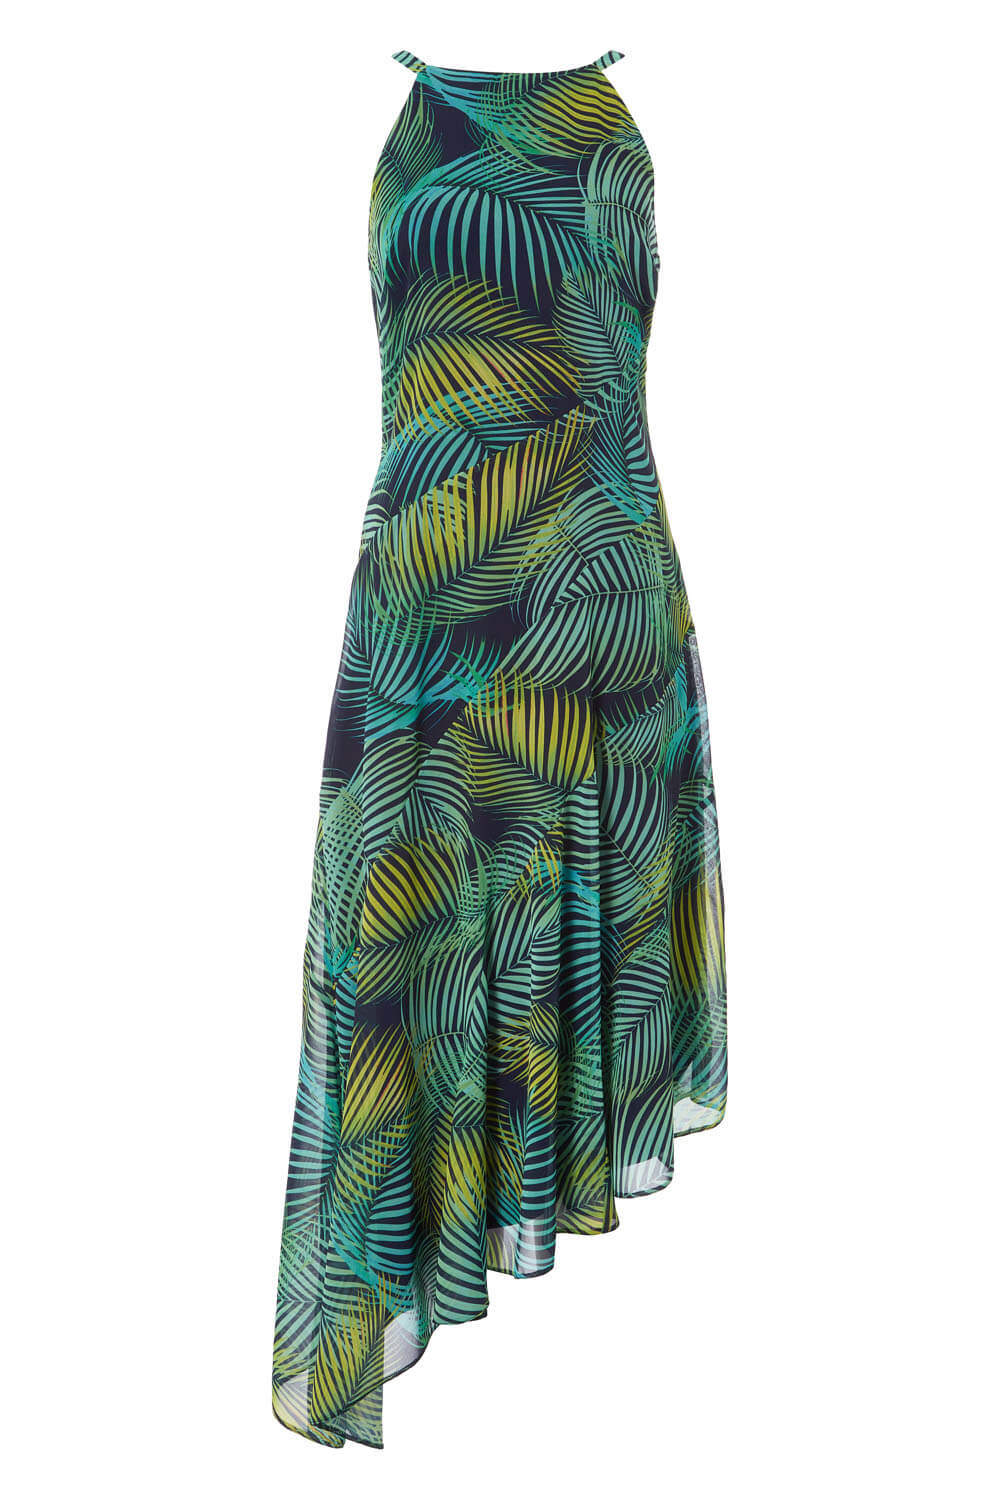 Green Leaf Print Halter Neck Midi Dress, Image 5 of 5